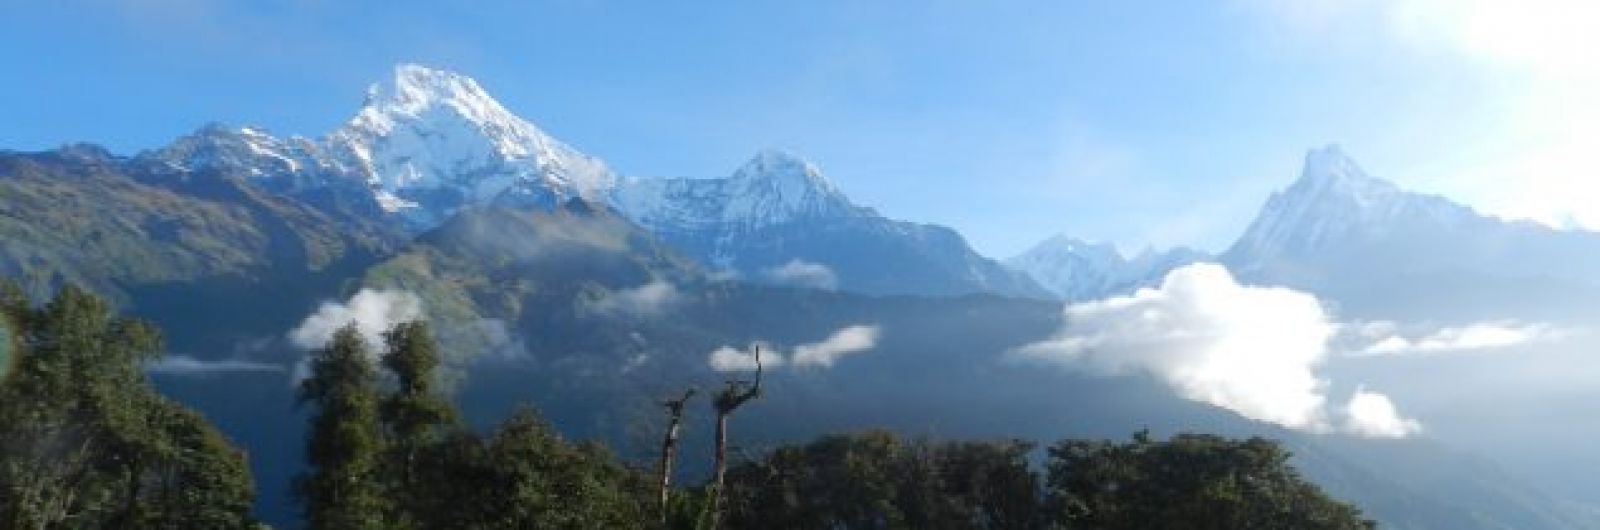 Trek Annapurna con Lago Tilicho hasta Jomson